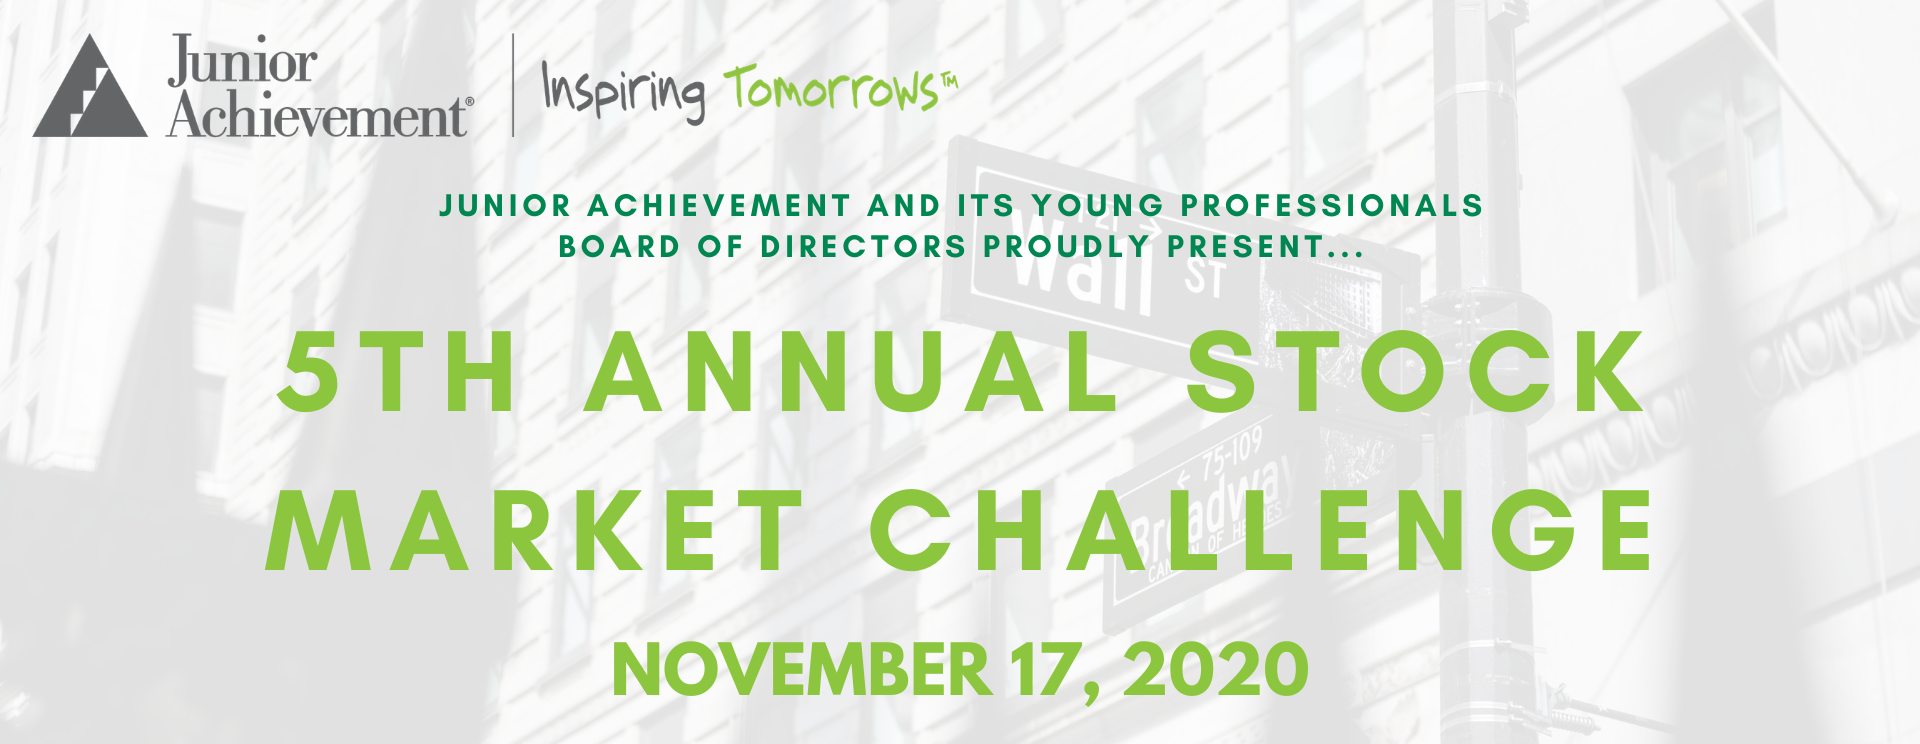 5th Annual Junior Achievement Stock Market Challenge